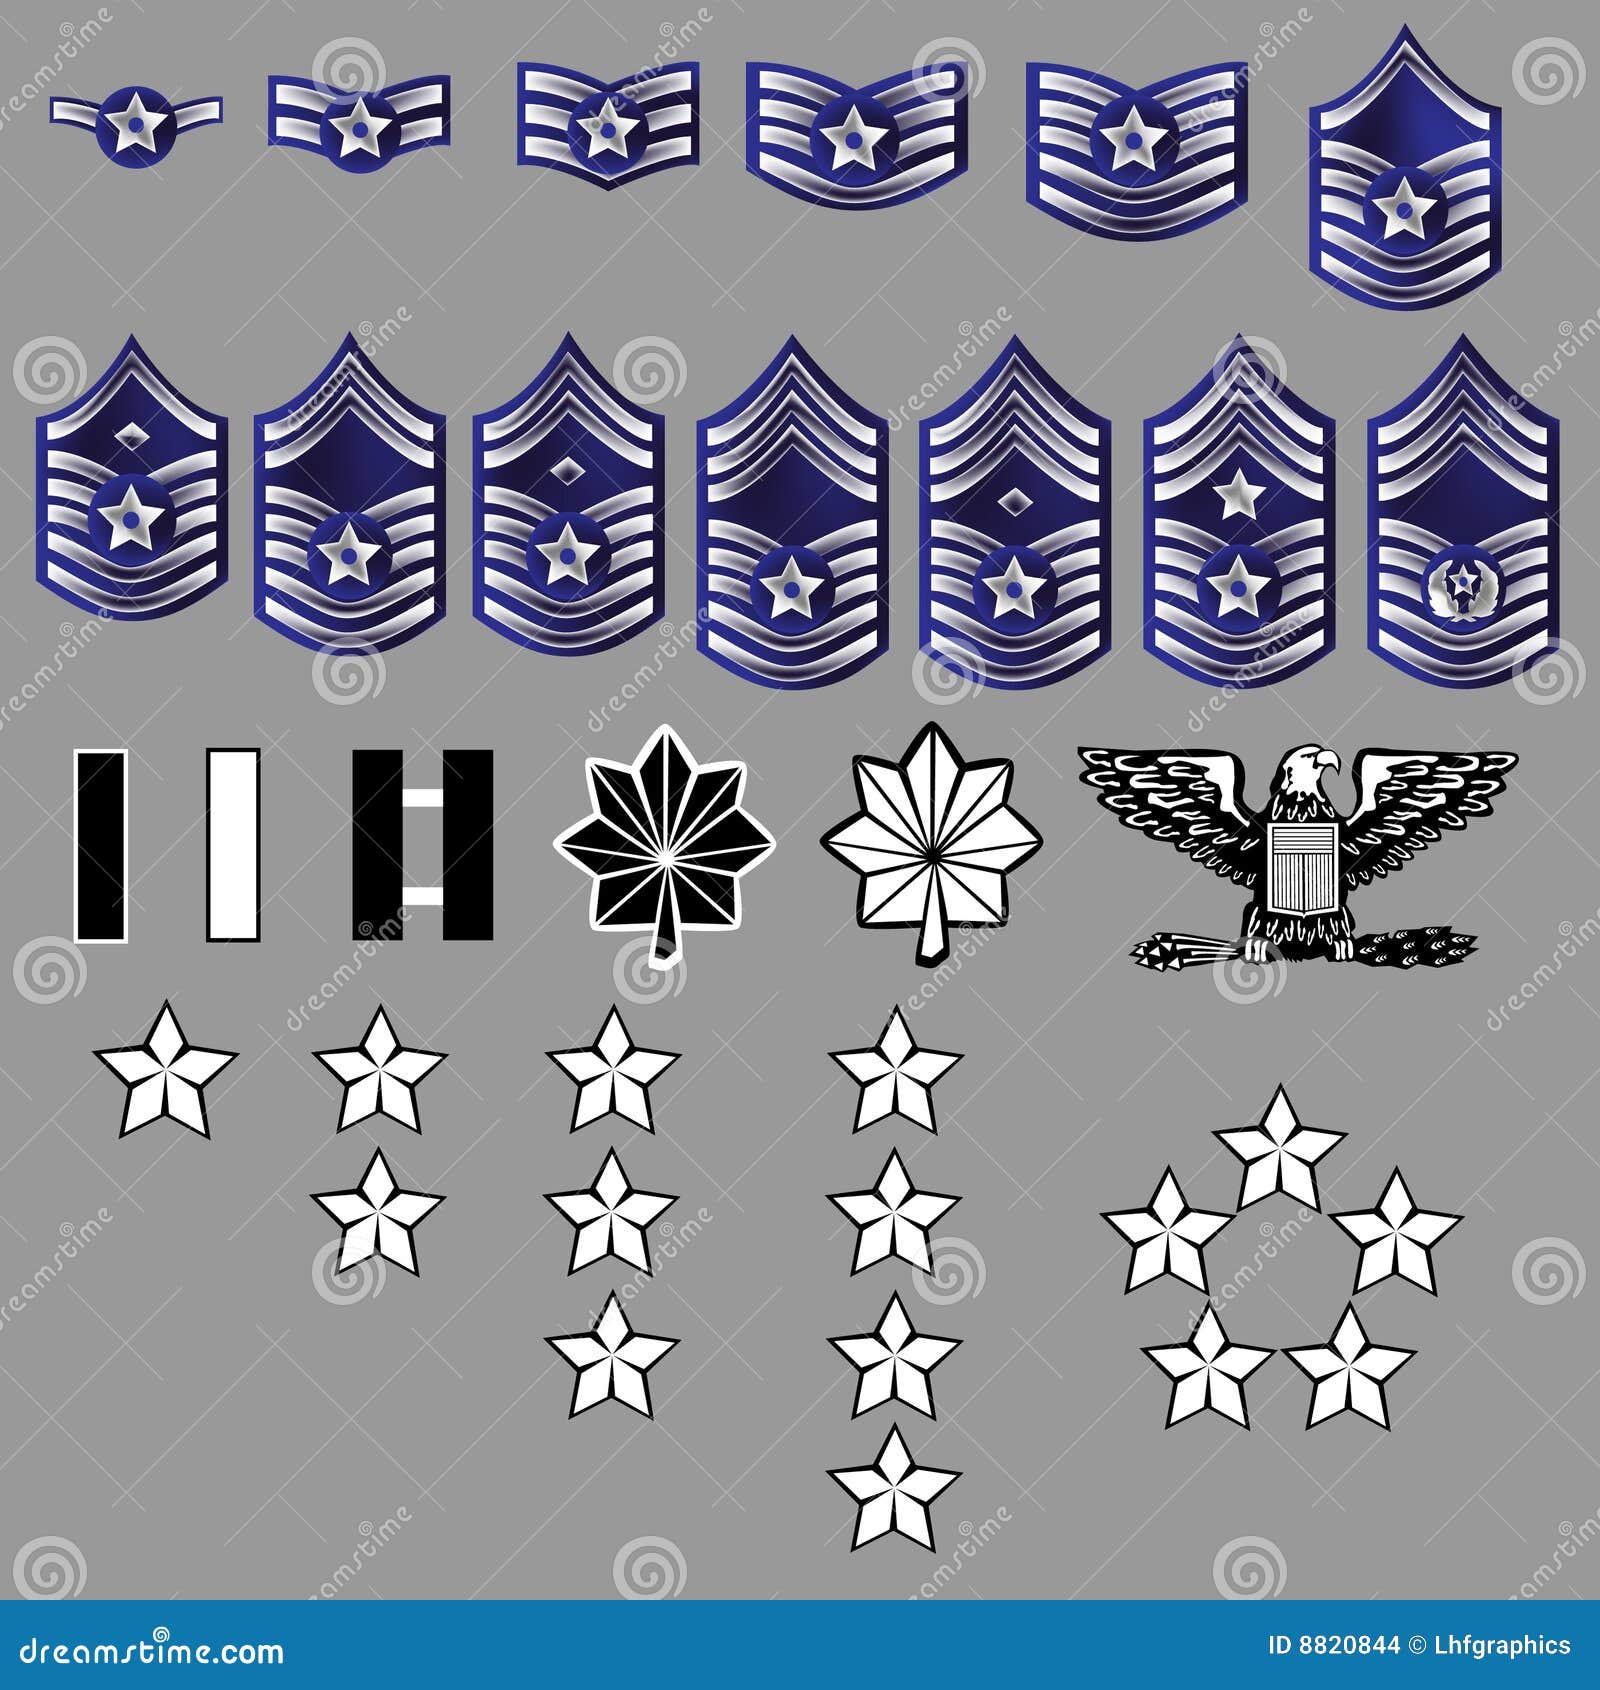 us air force rank insignia - fabric texture